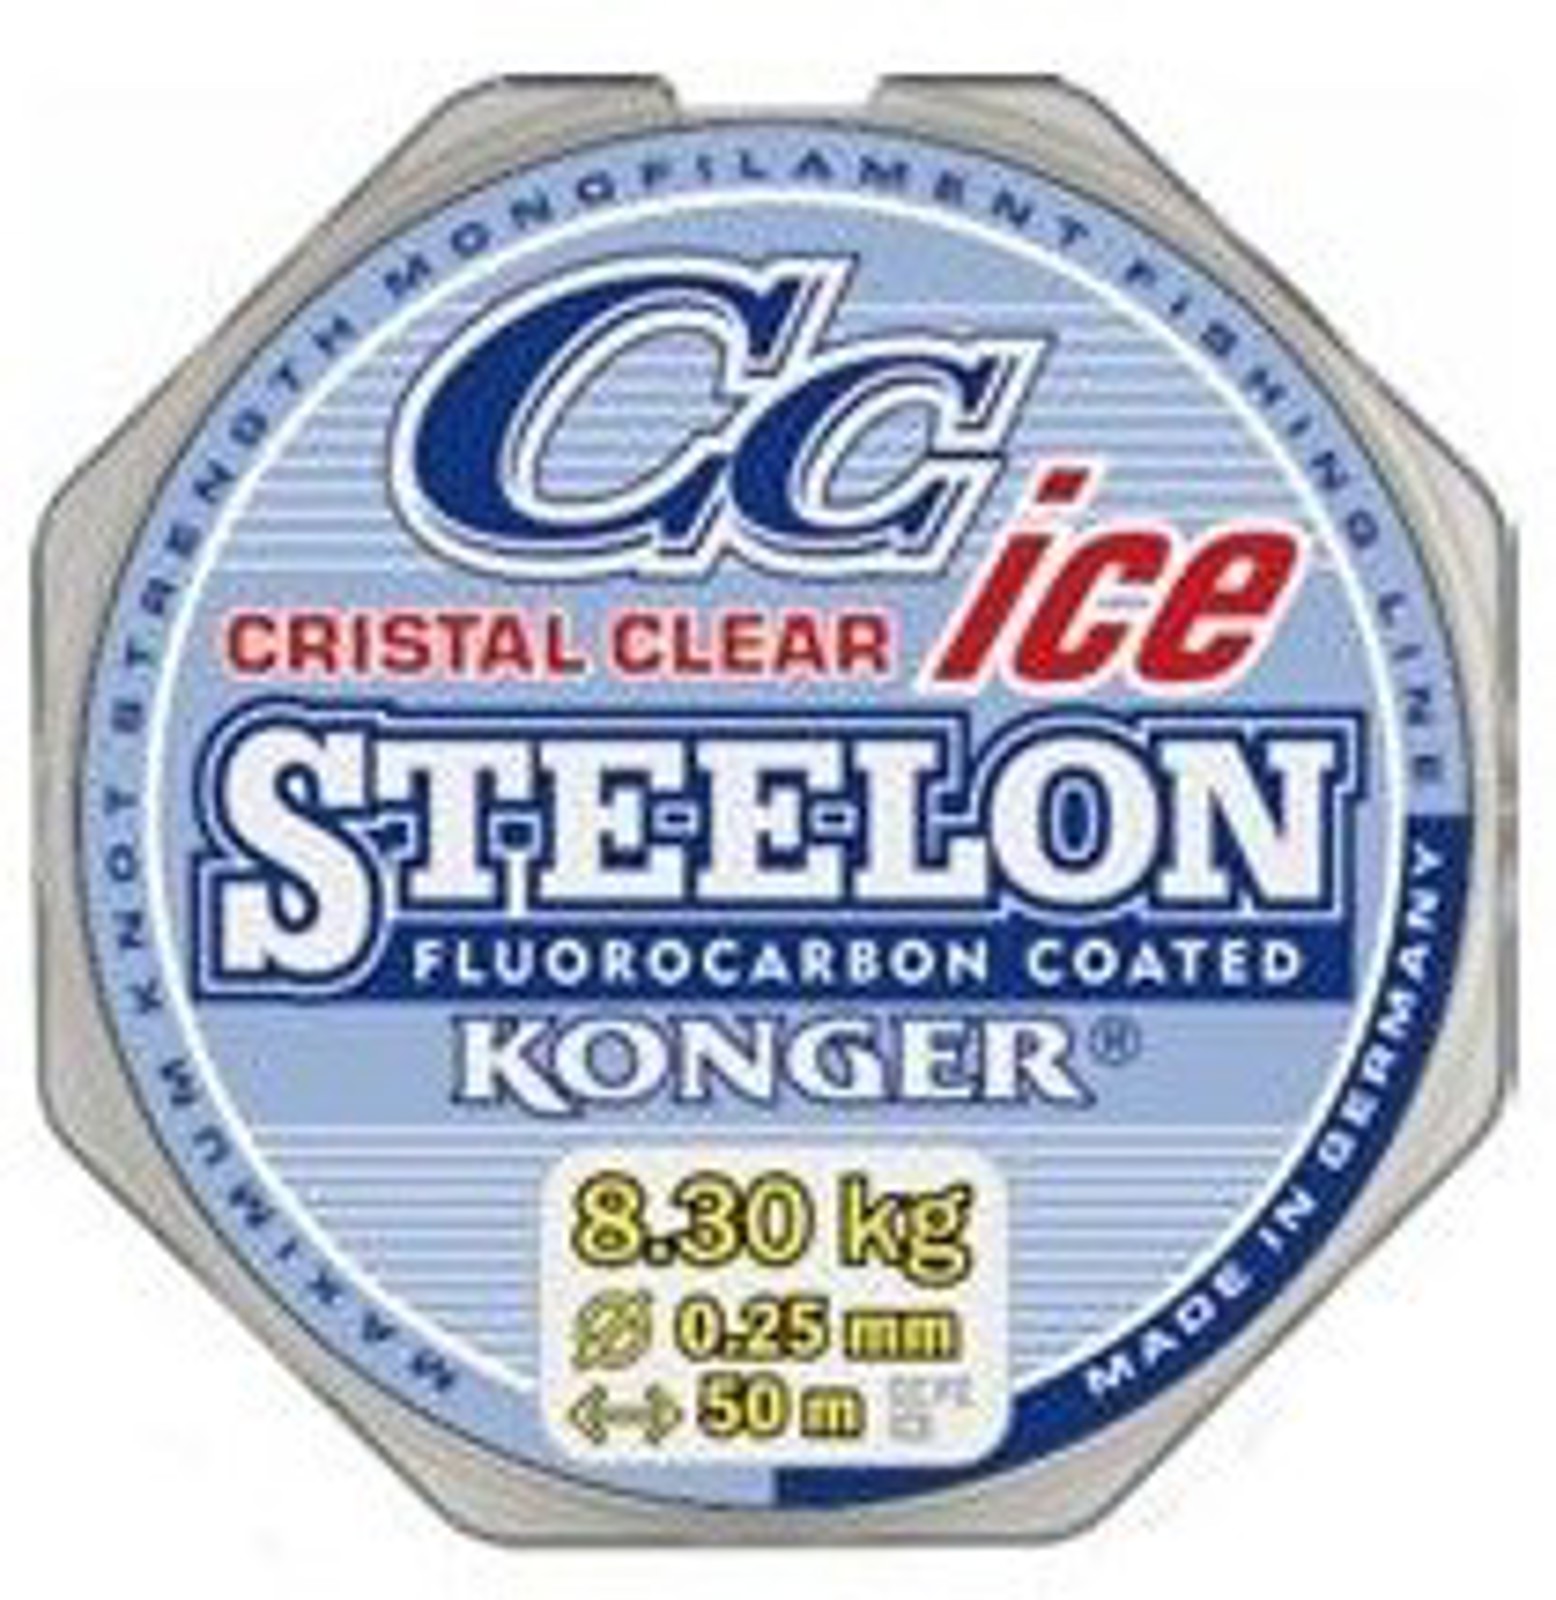 Konger vlasec Steelon Cristal Clear Fluorocarbon Ice 50m 0,16mm